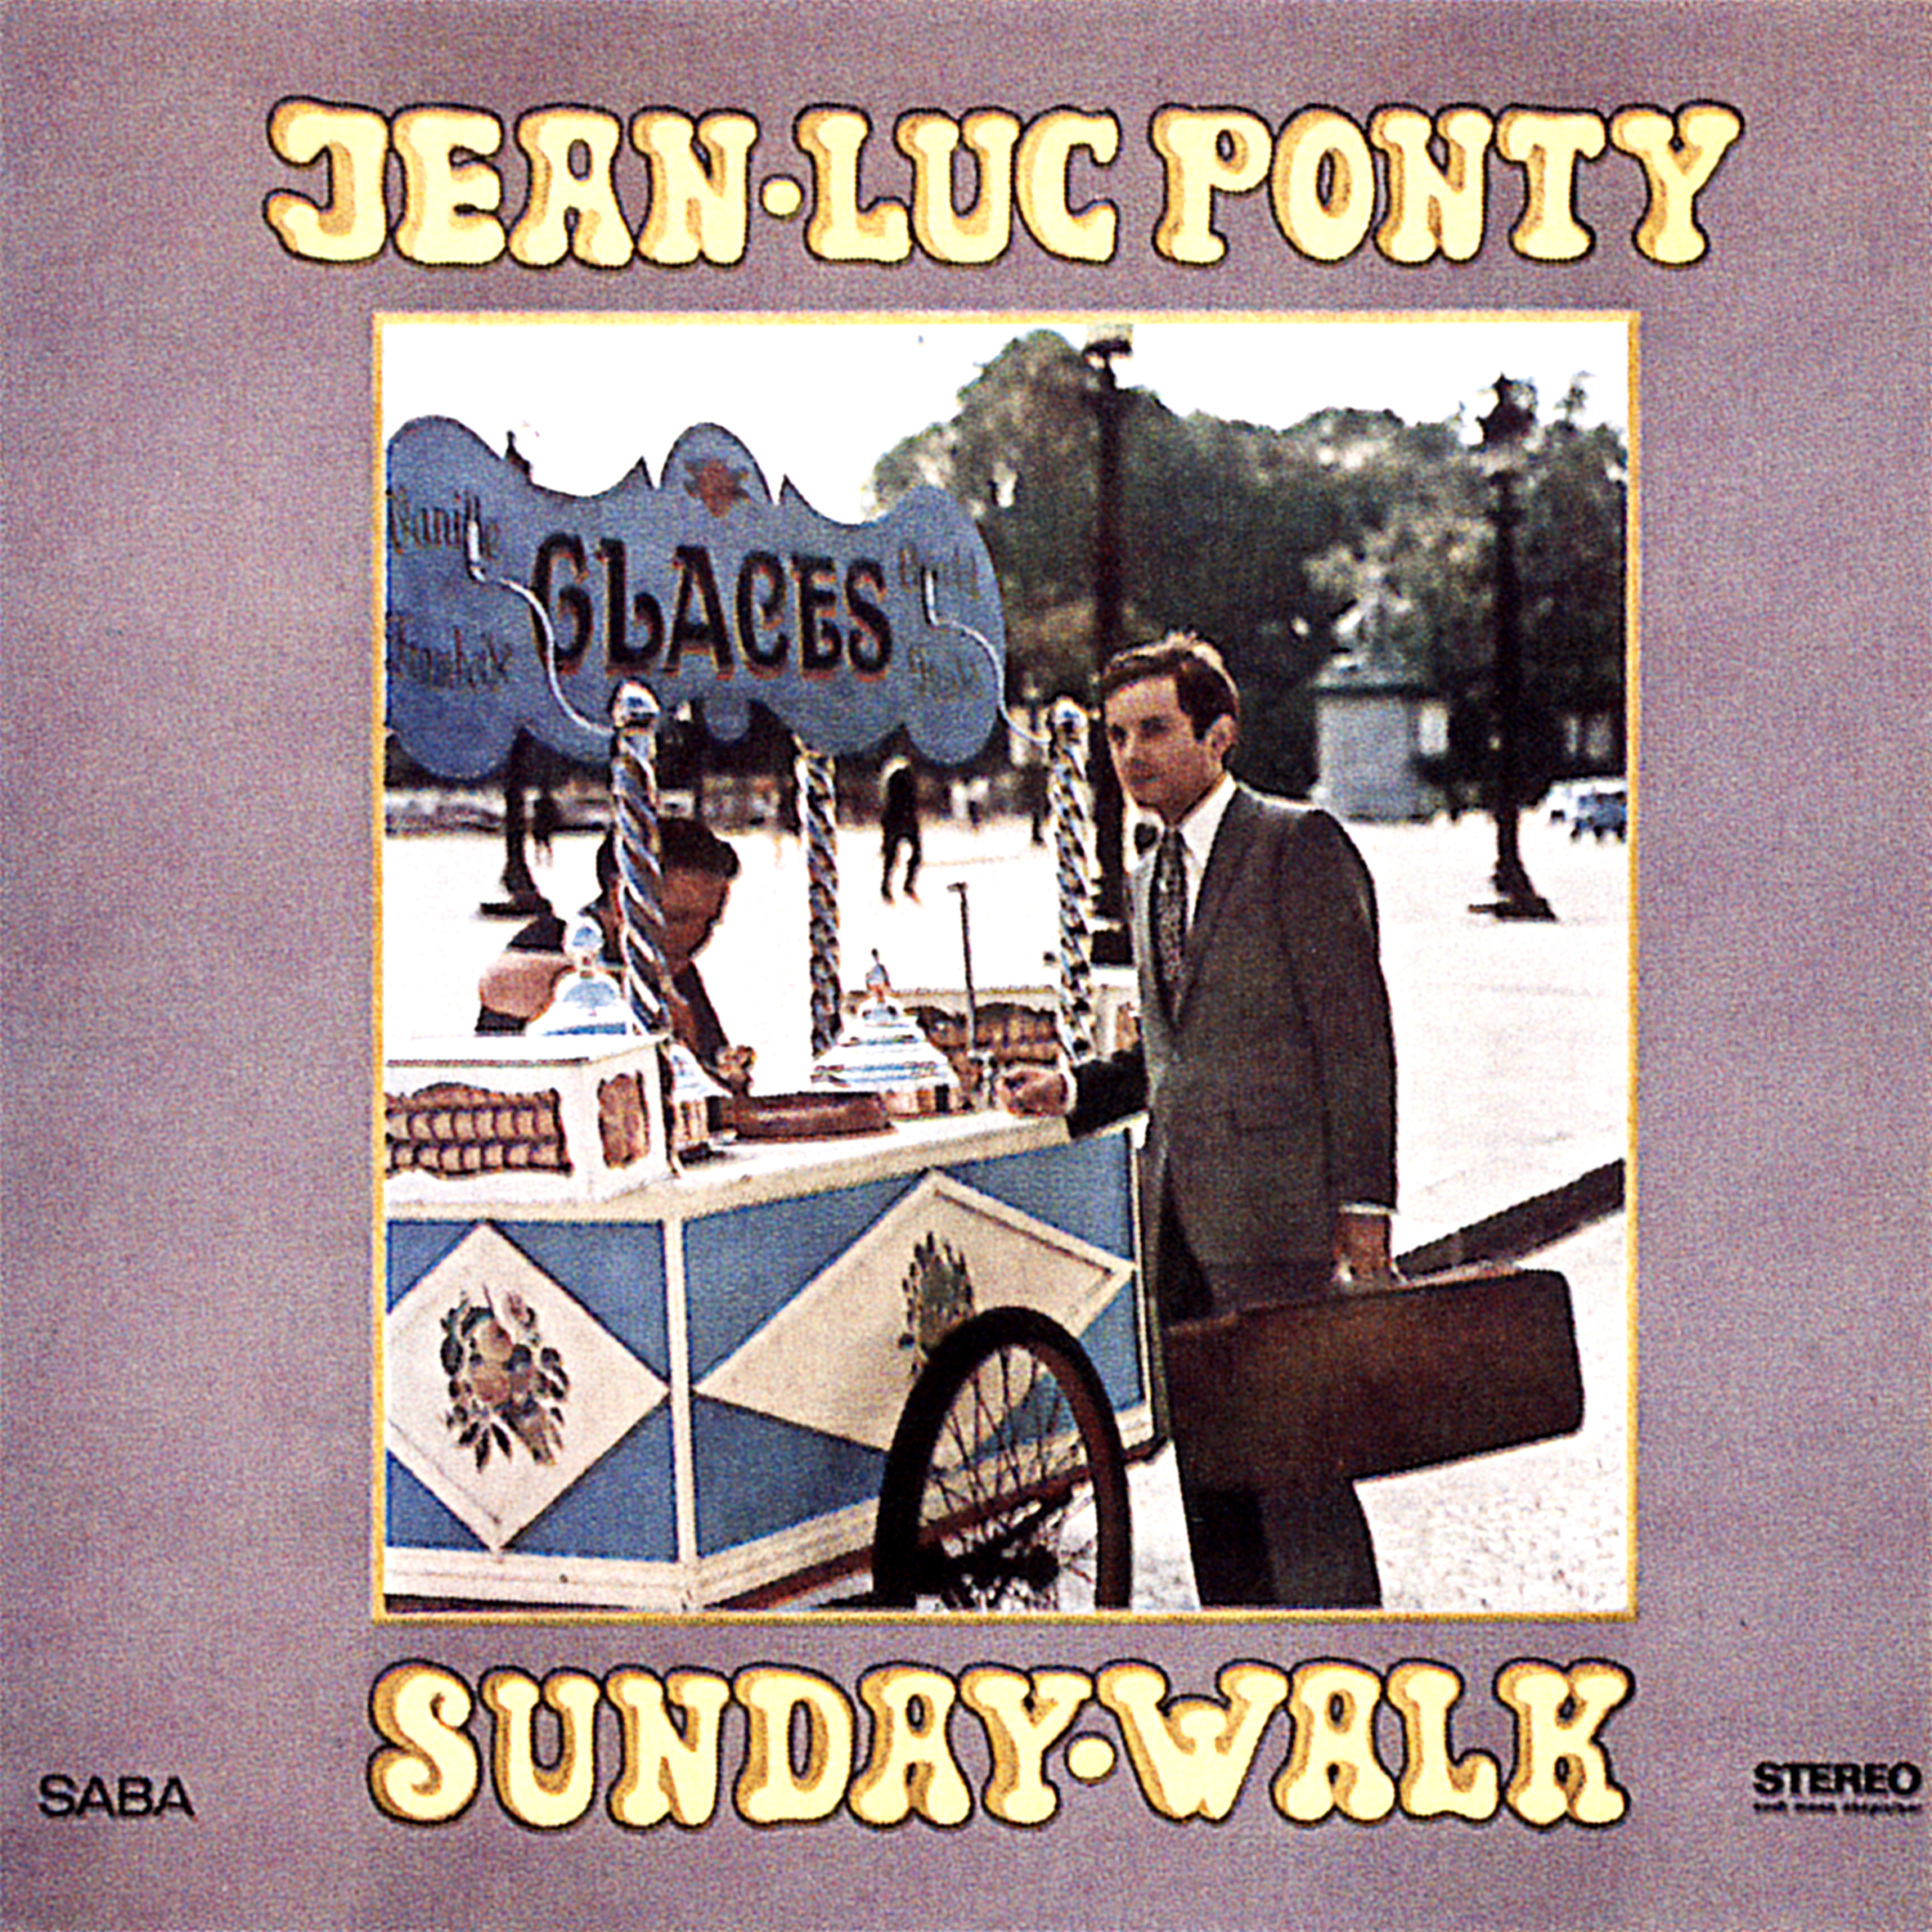 Sunday Walk - Jean-Luc Ponty